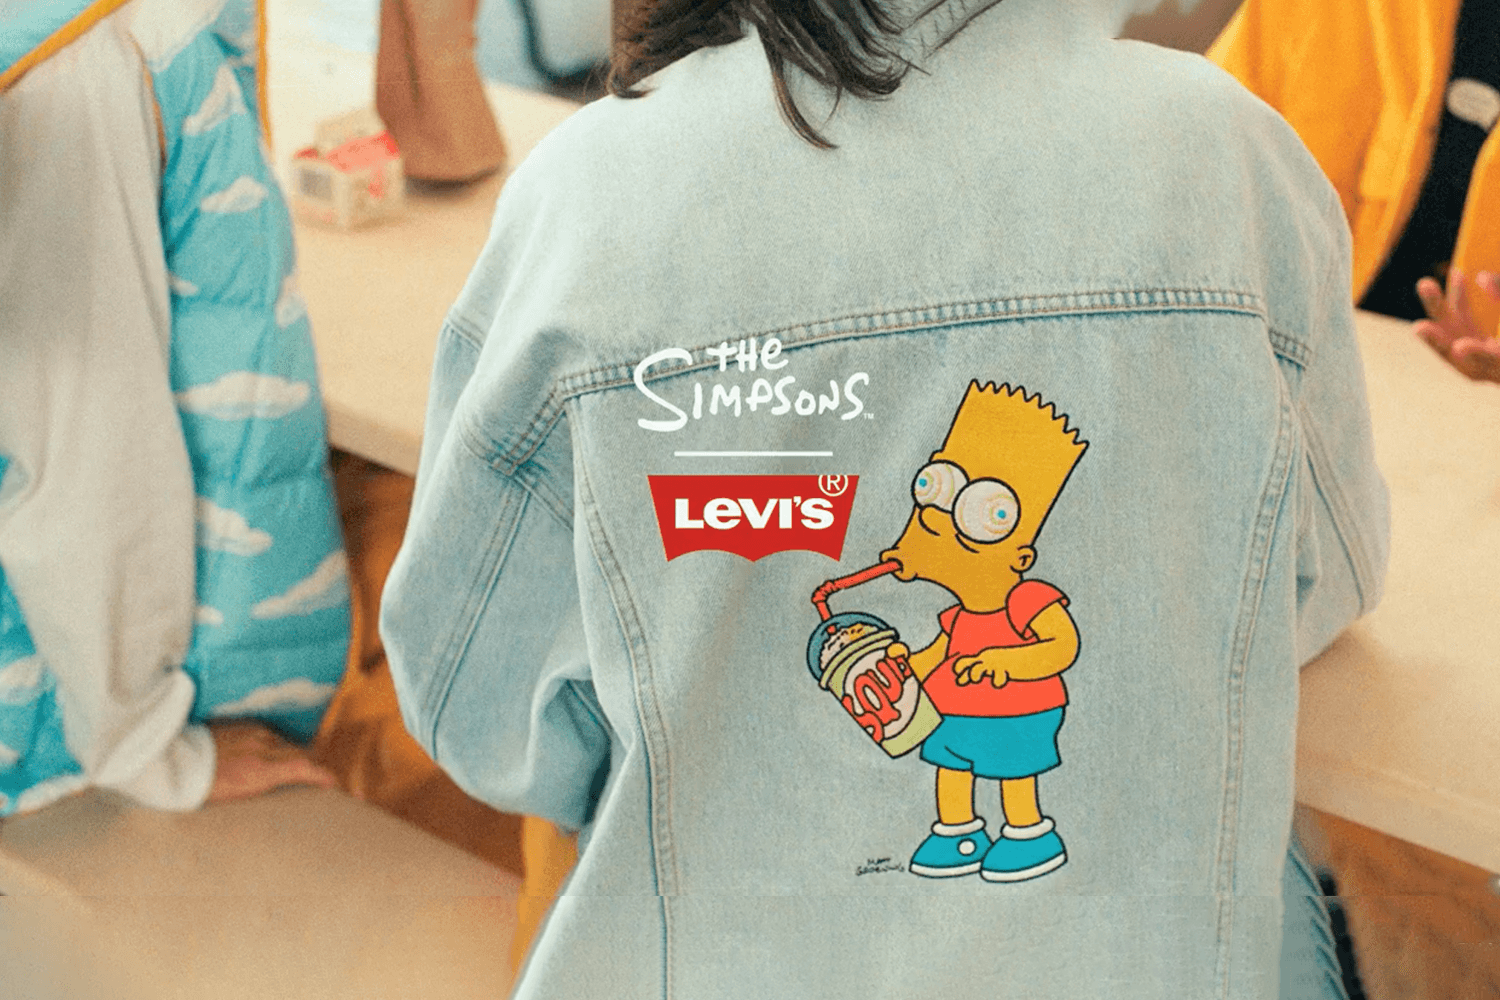 Die Levi's x The Simpson Kollaboration